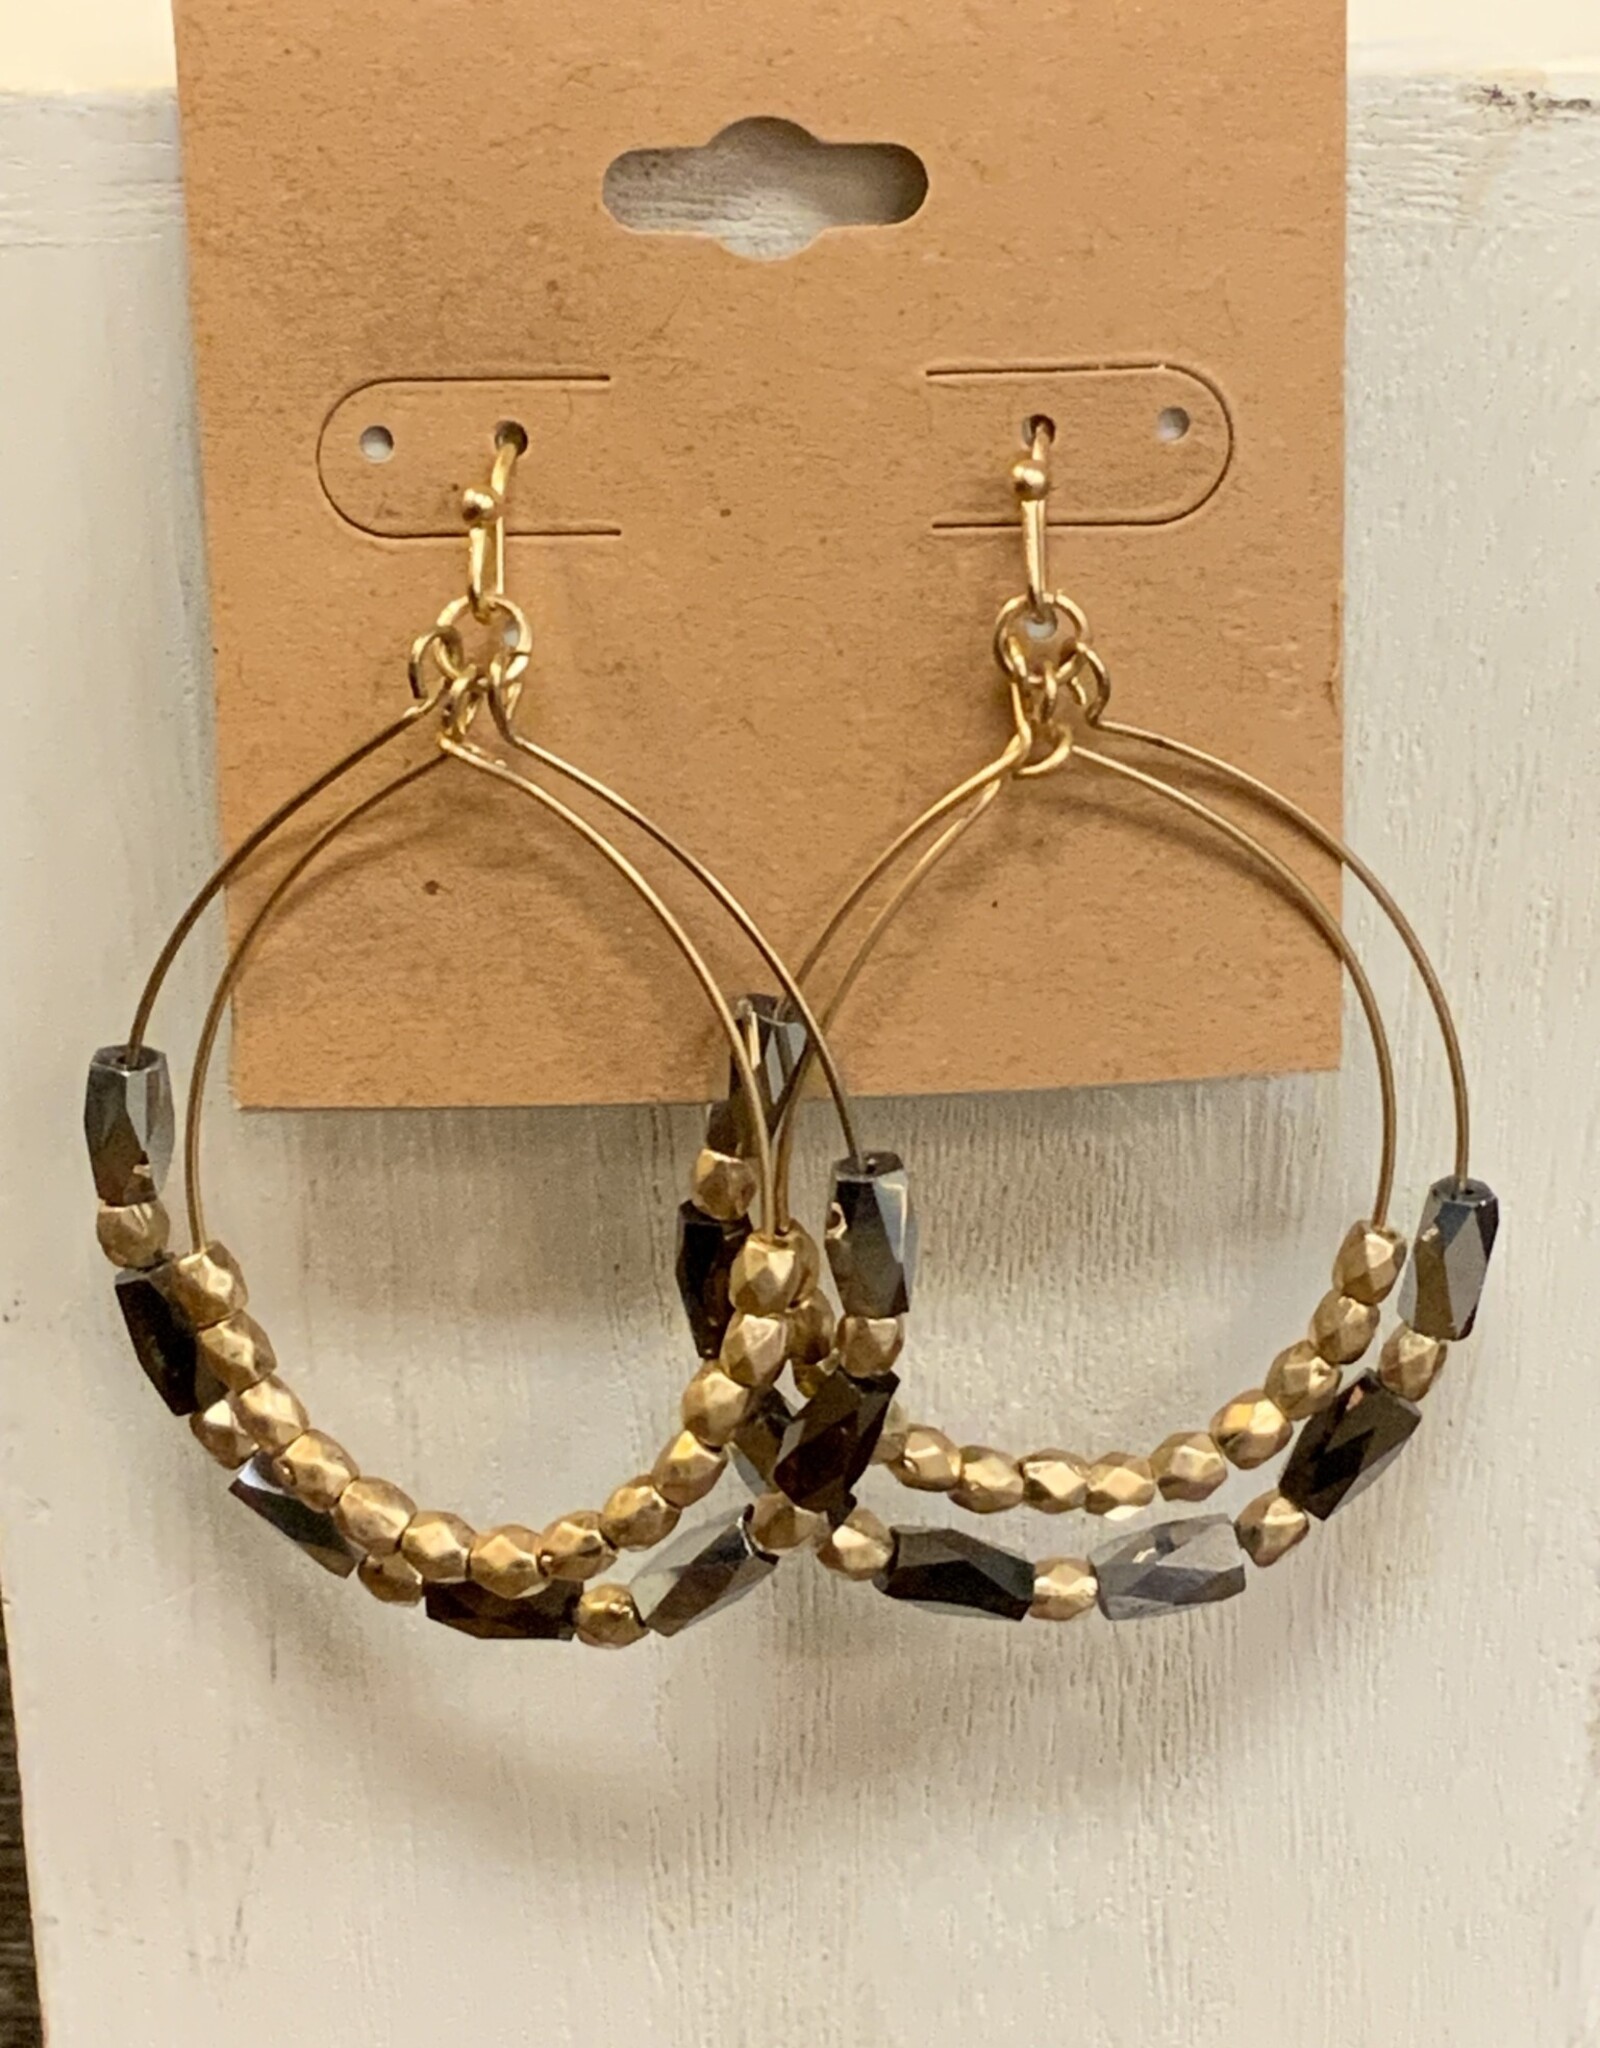 Gold/Gun Metal Beaded Double Hoop Wire Earring